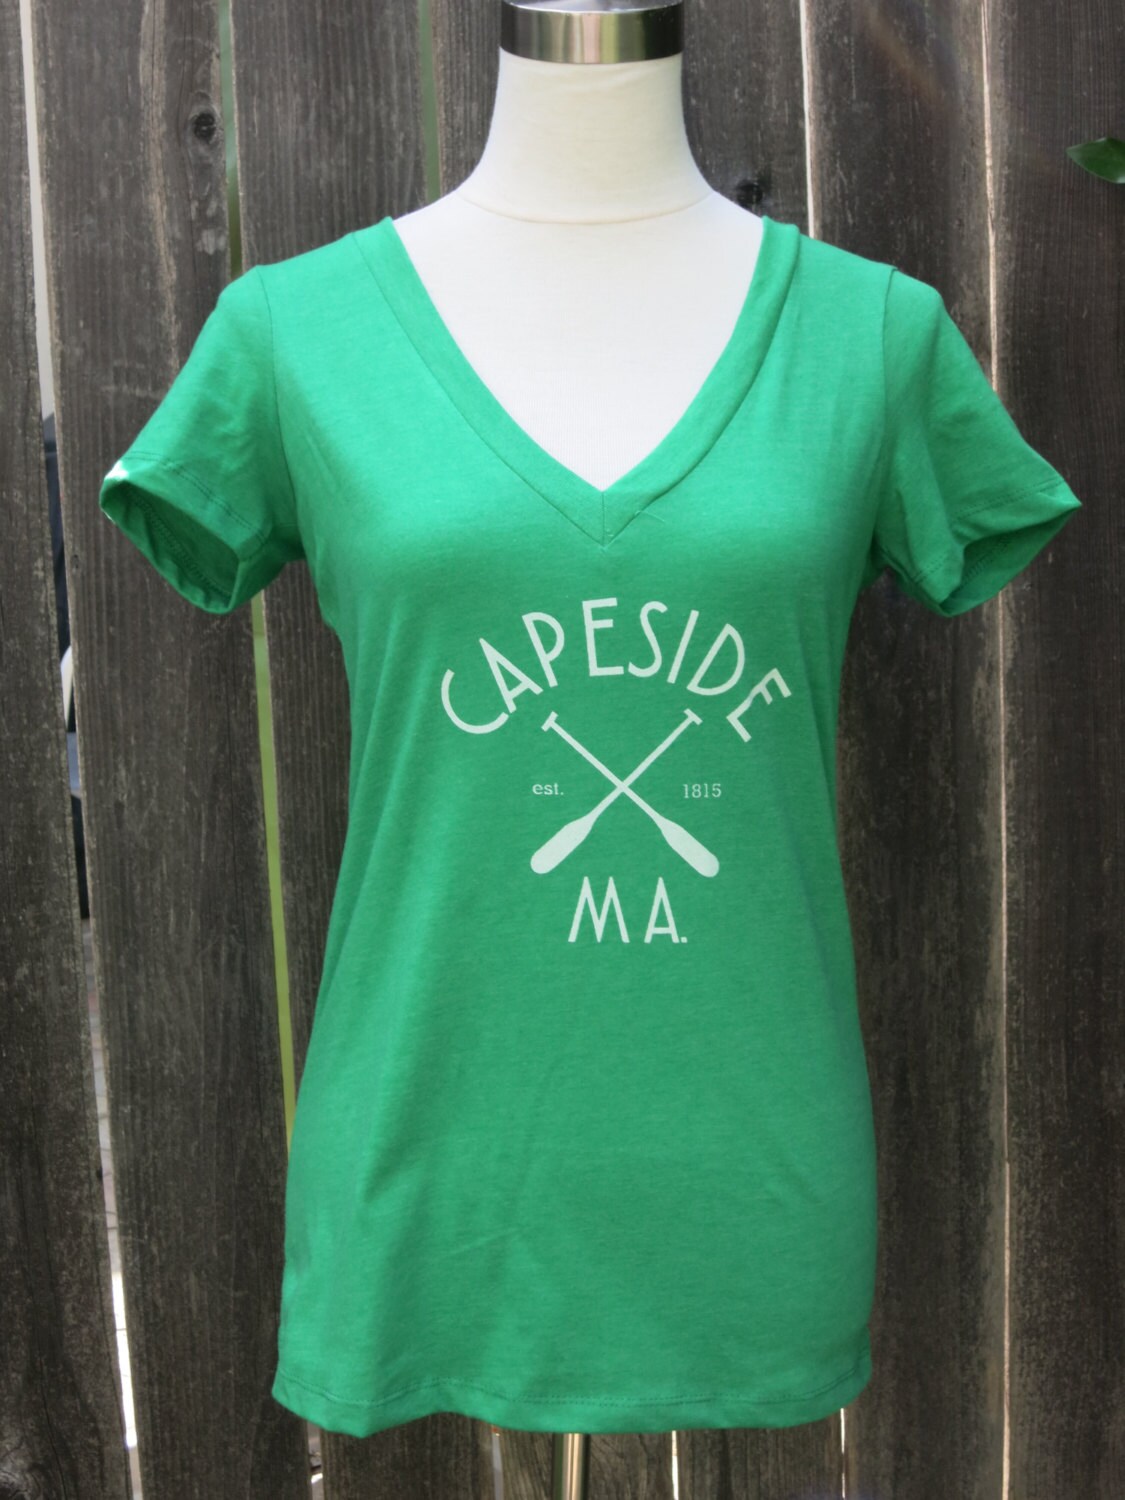 Capside MA. Women's Vneck Screenprinted Shirt - Etsy